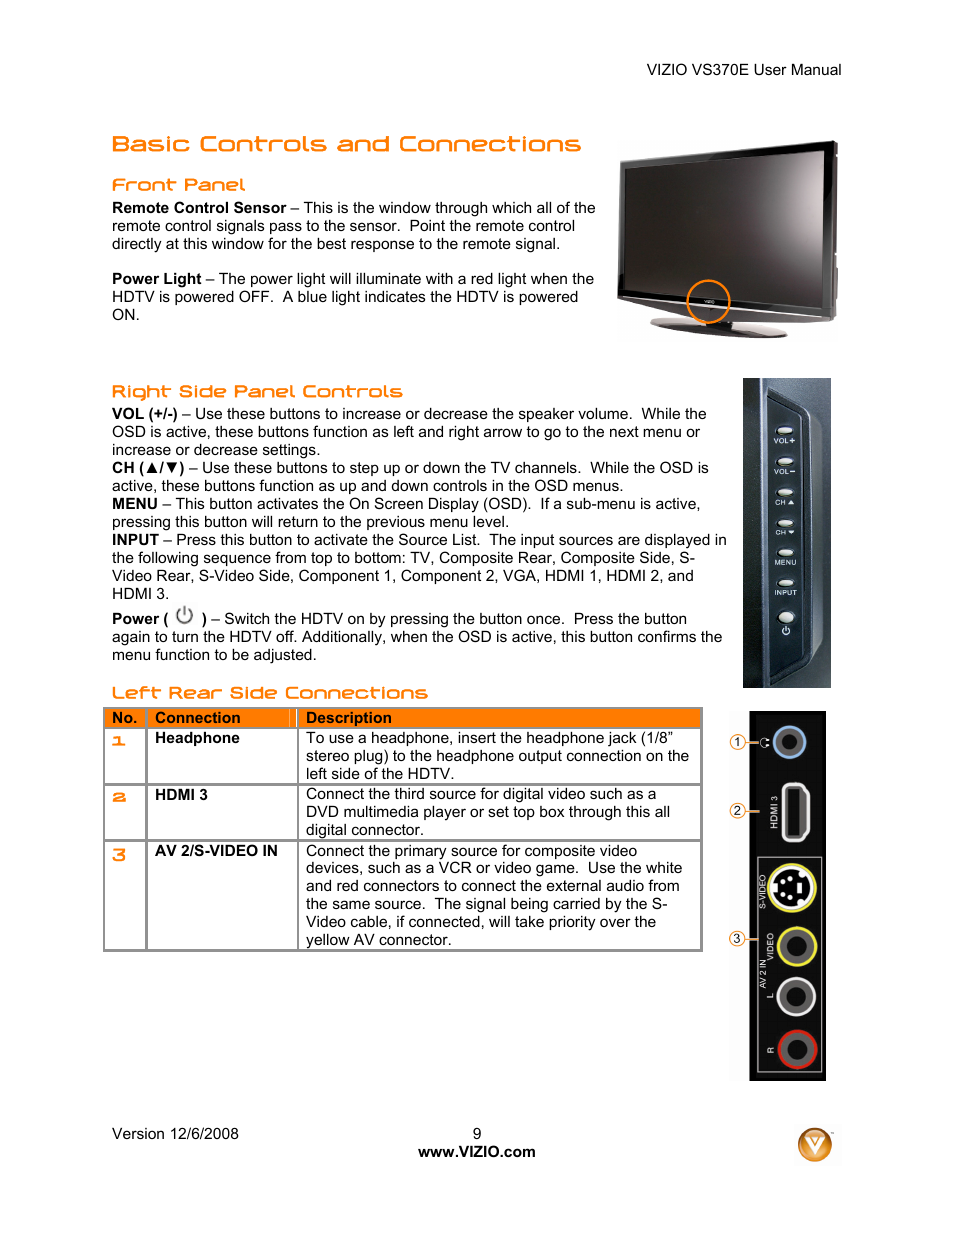 Basic controls and connections | Vizio VS370E User Manual | Page 9 / 43